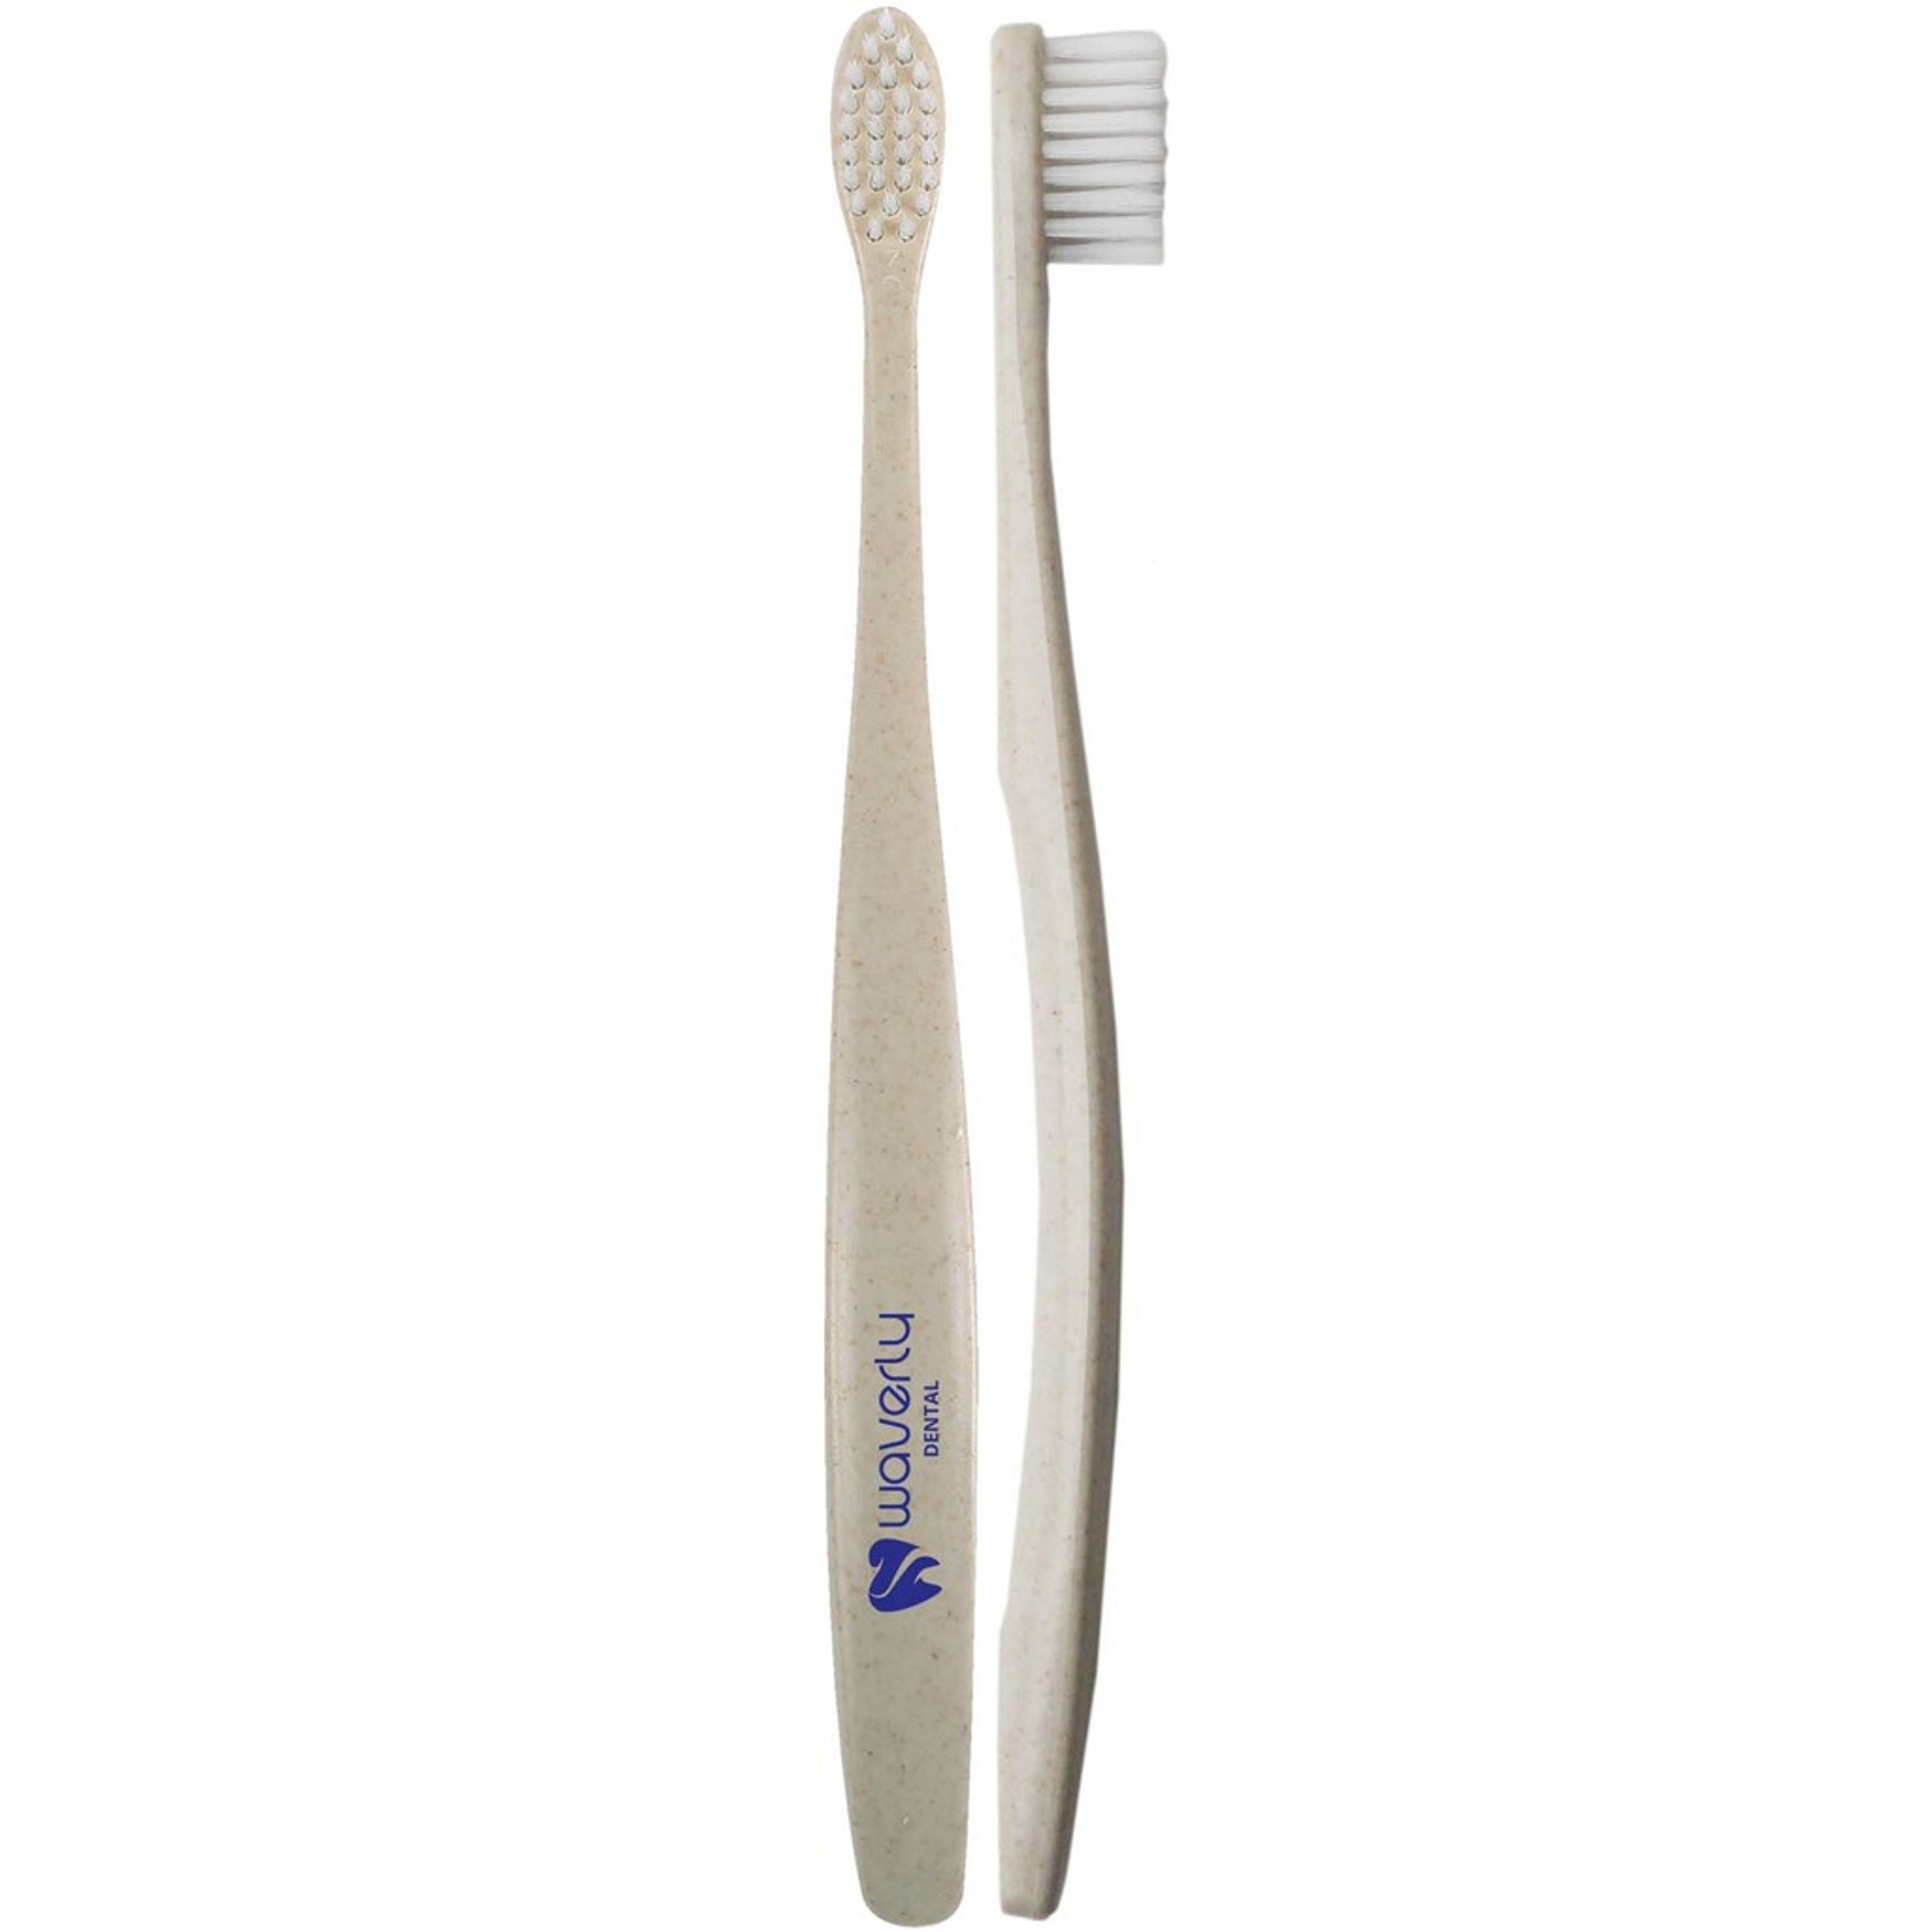 Wheat Husk Toothbrush | Biodegradable